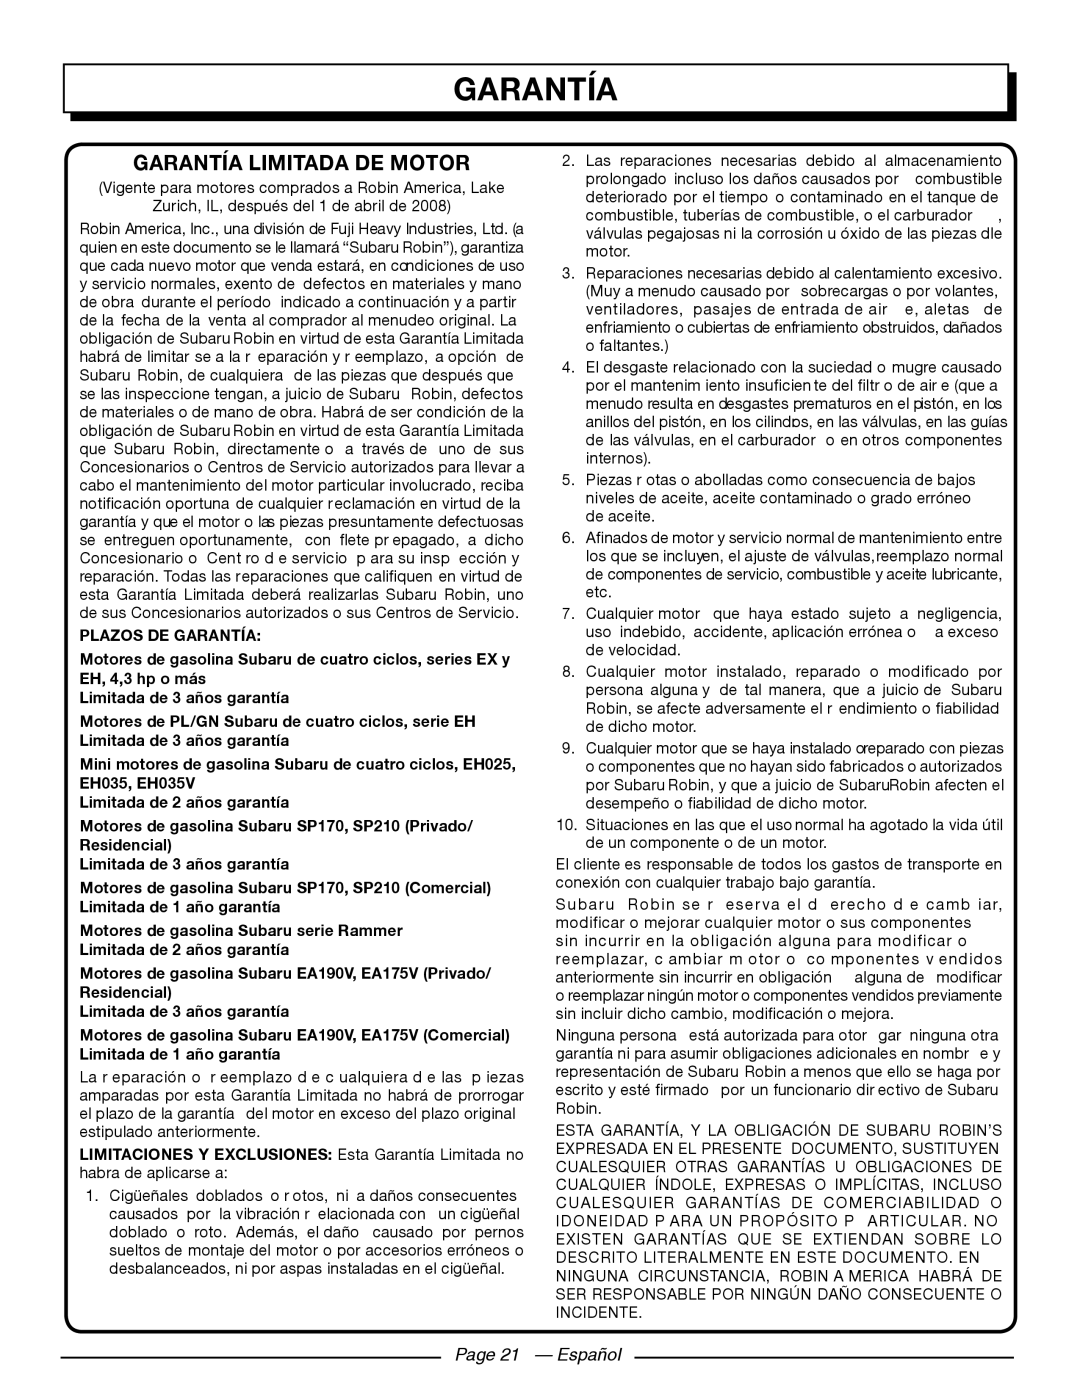 Homelite UT80709, UT80911 Garantía Limitada De Motor, Page 21 - Español, Plazos De Garantía, Limitada de 3 años garantía 